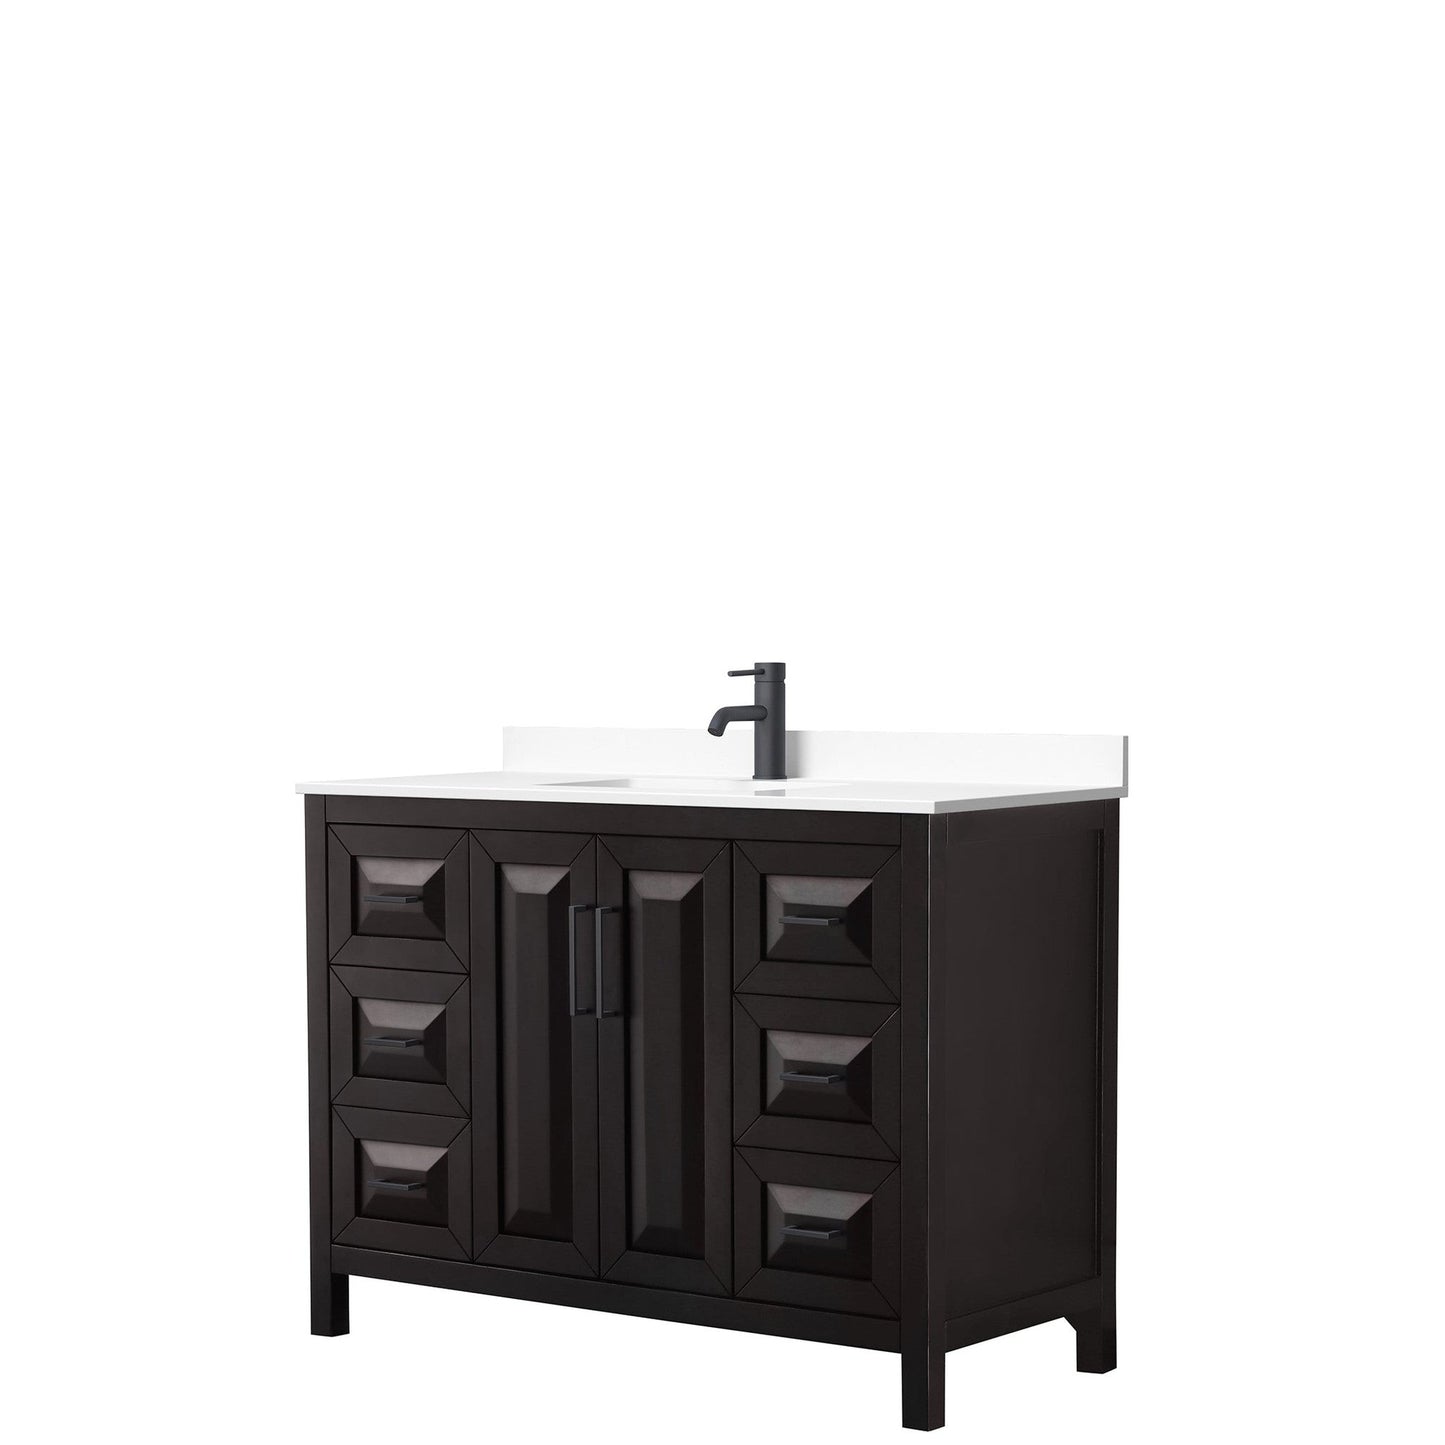 Daria 48" Single Bathroom Vanity in Dark Espresso, White Cultured Marble Countertop, Undermount Square Sink, Matte Black Trim